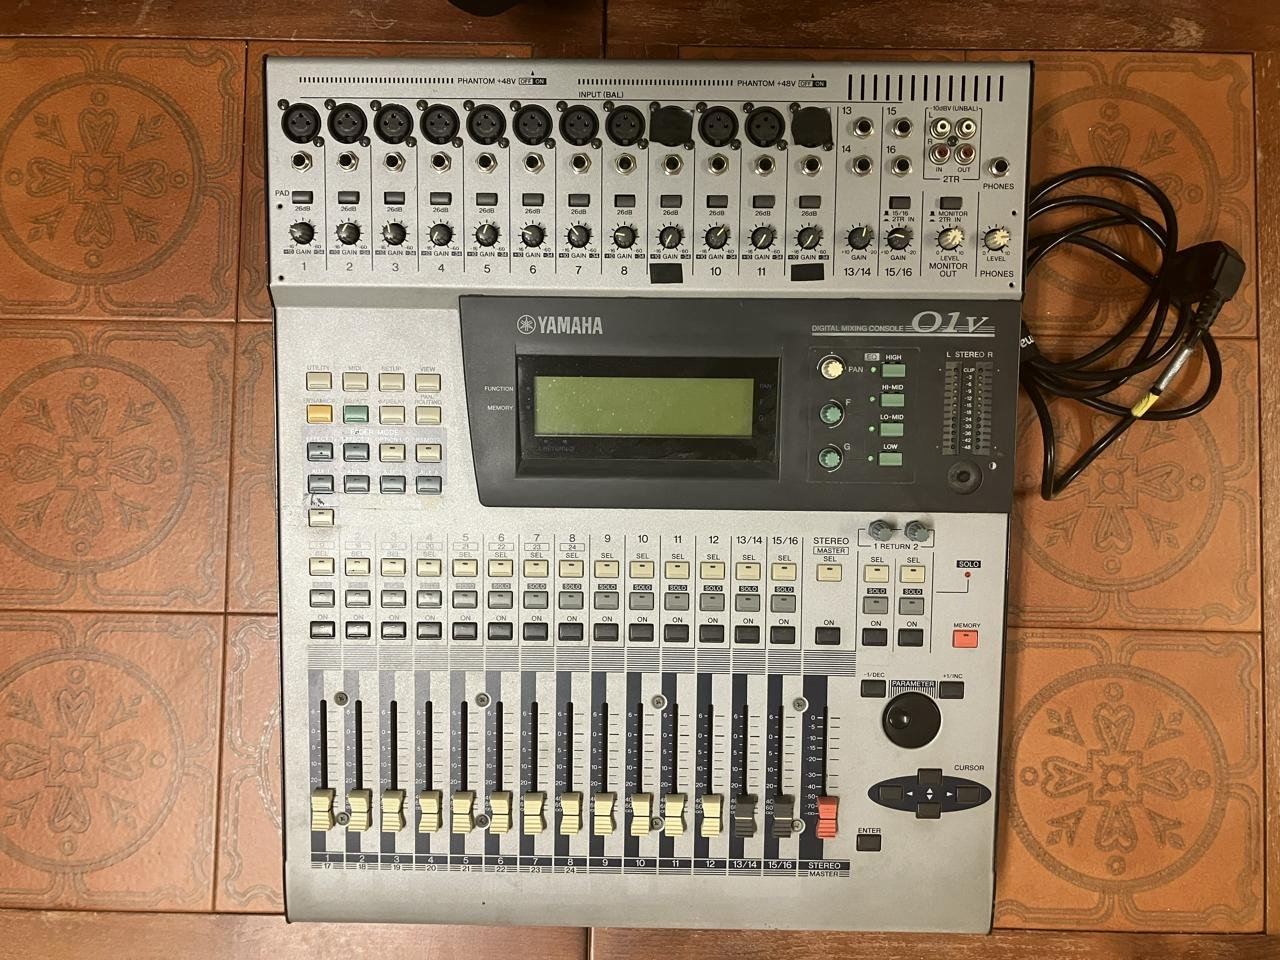 Yamaha 01v mixer